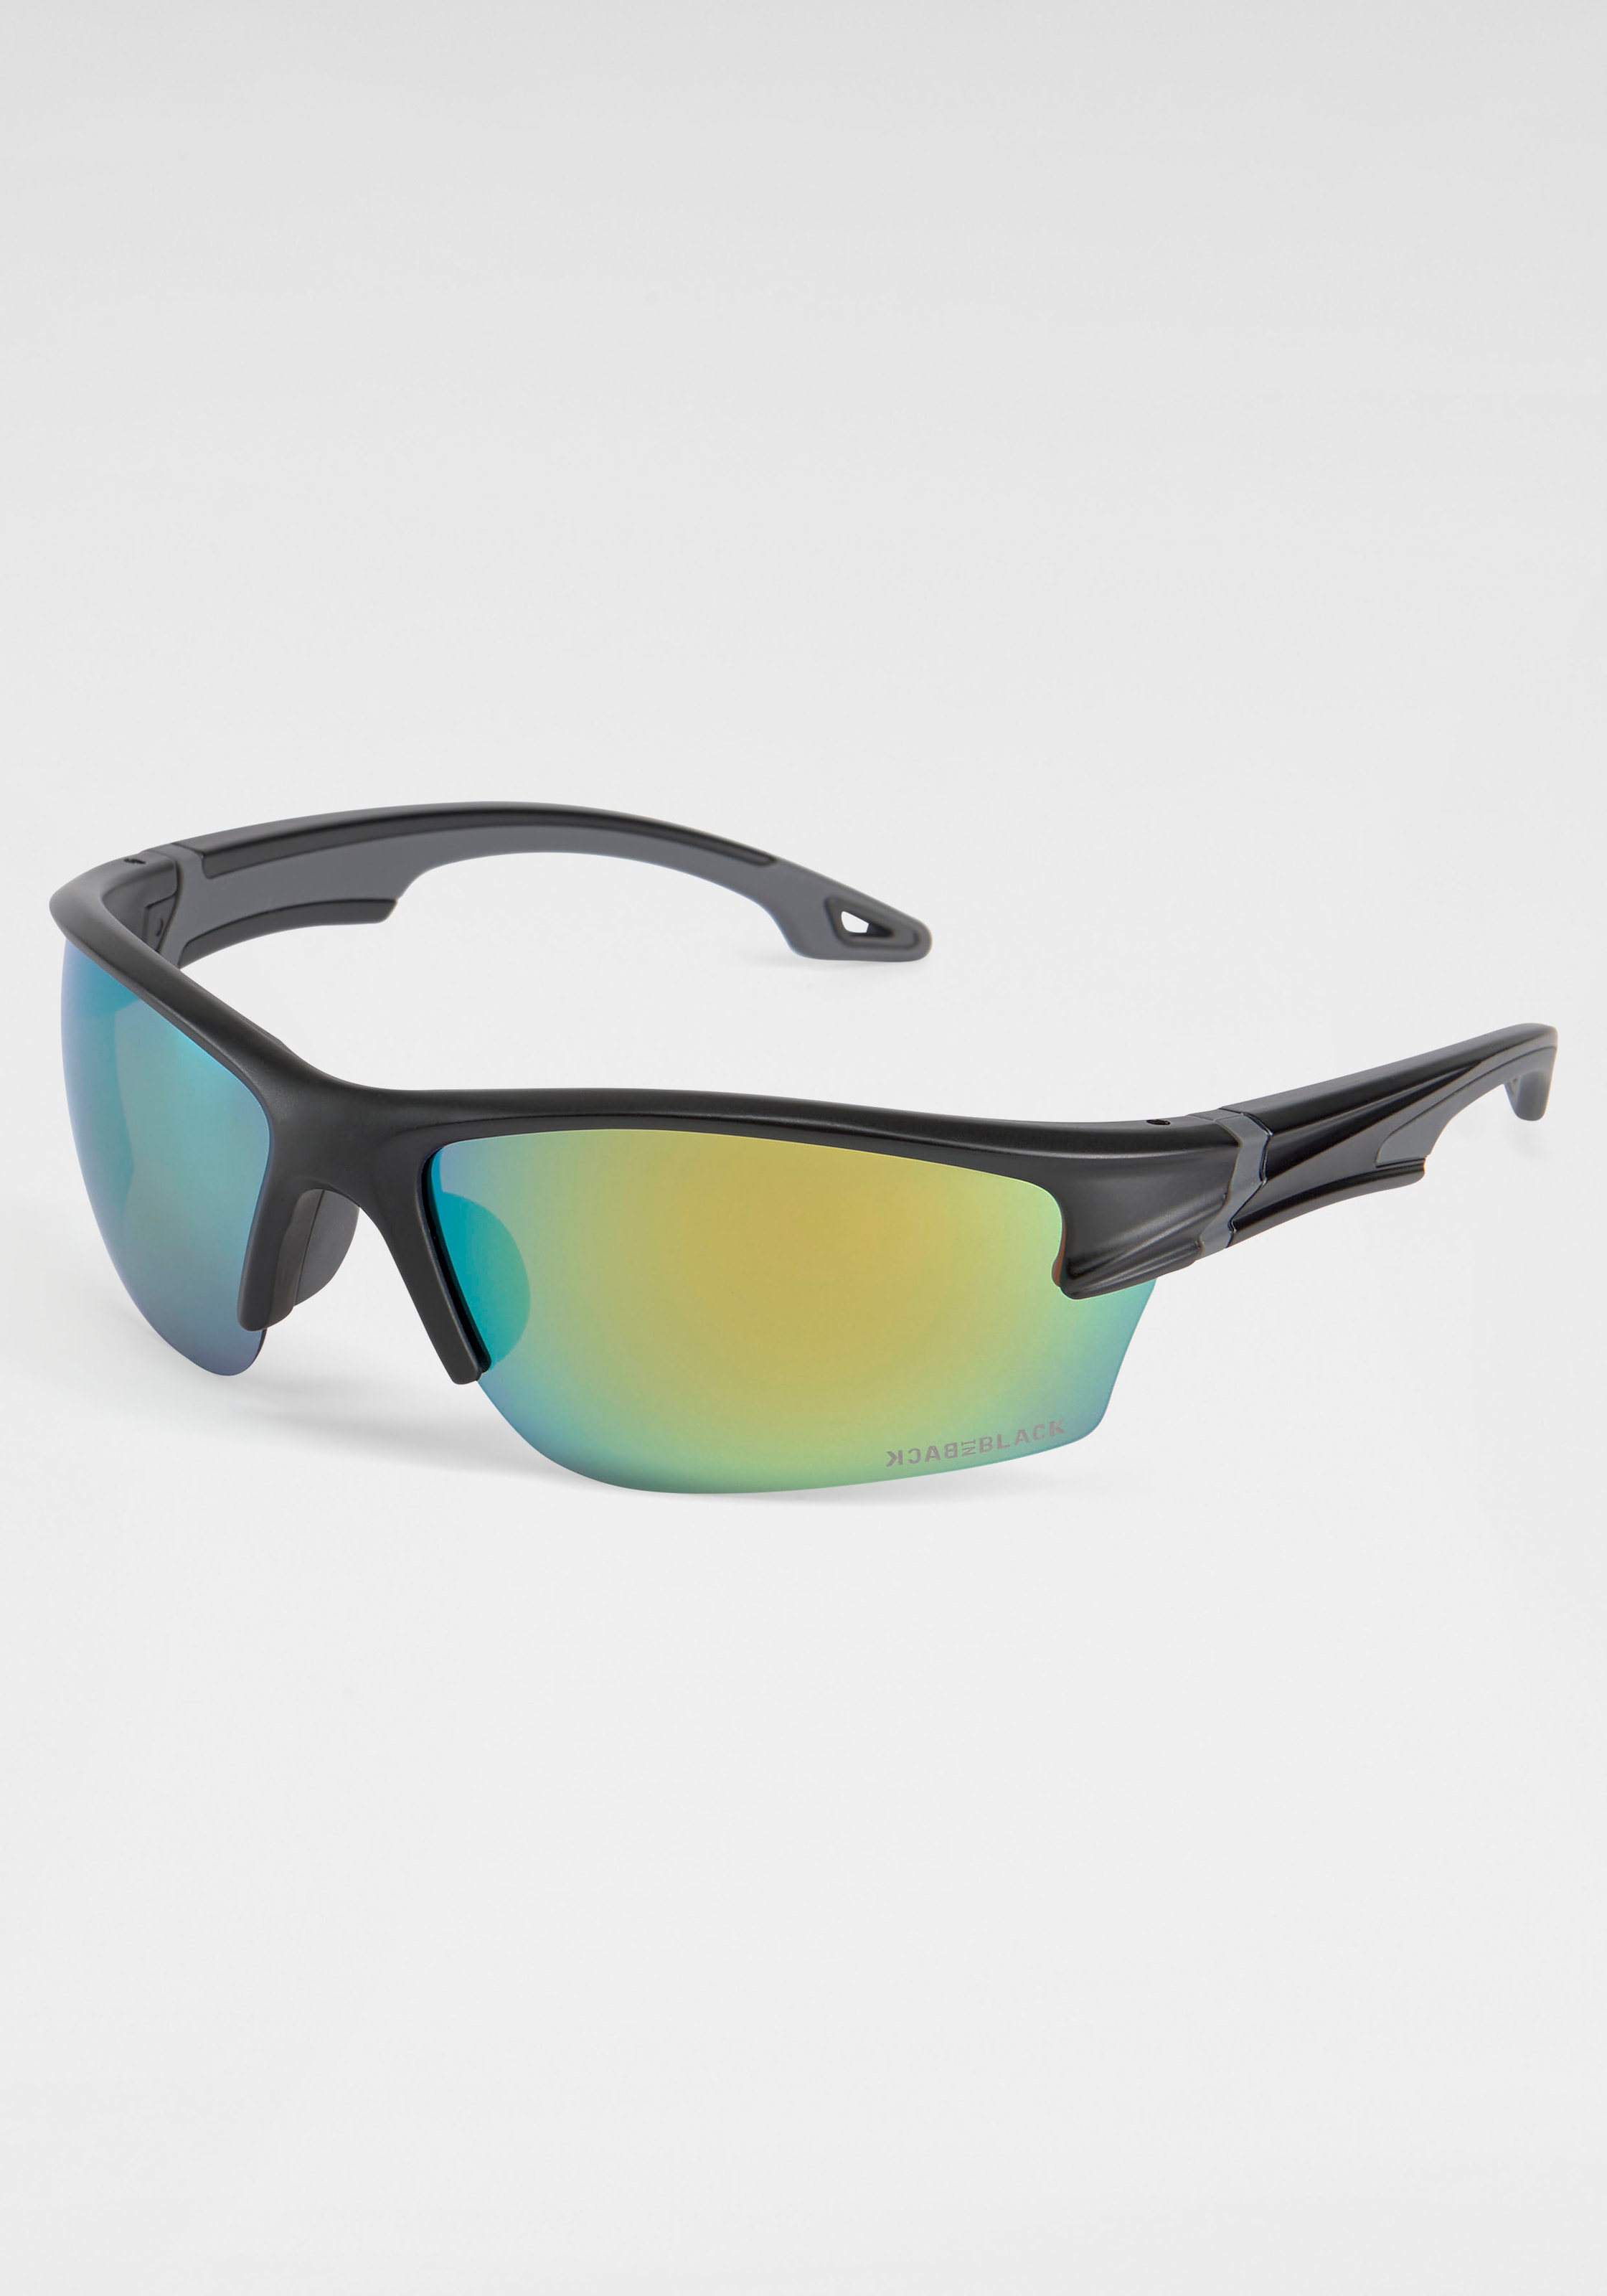 BACK IN BLACK Eyewear bei Sonnenbrille shoppen OTTO online